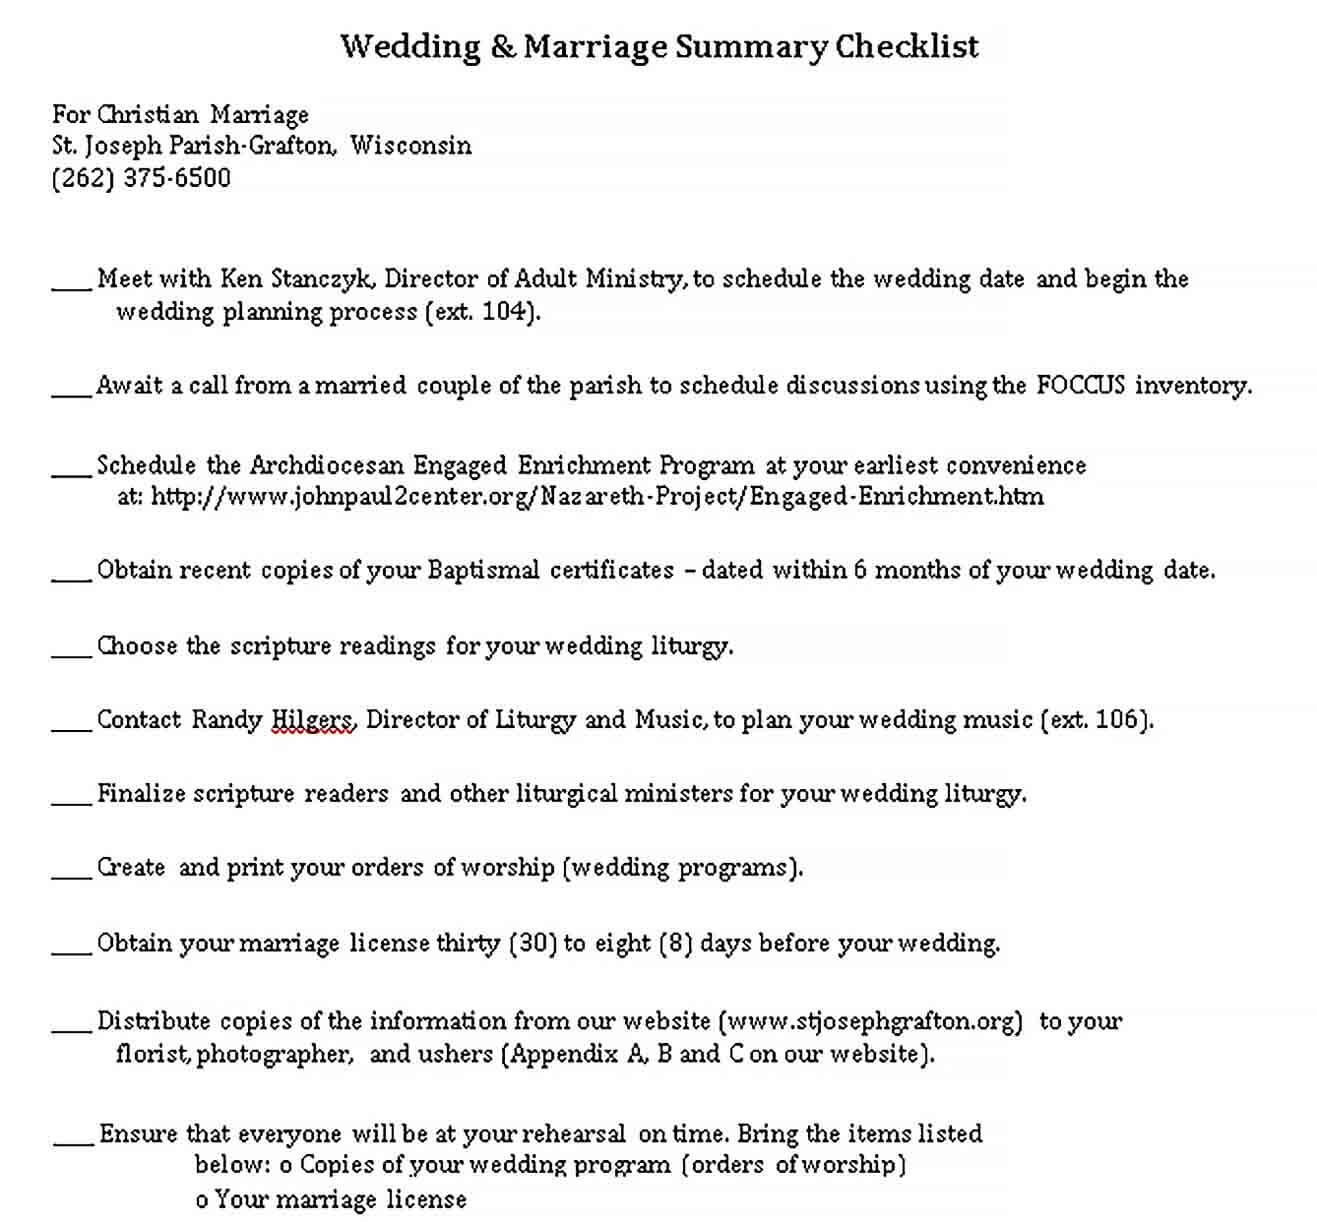 Sample Wedding Summary Checklist